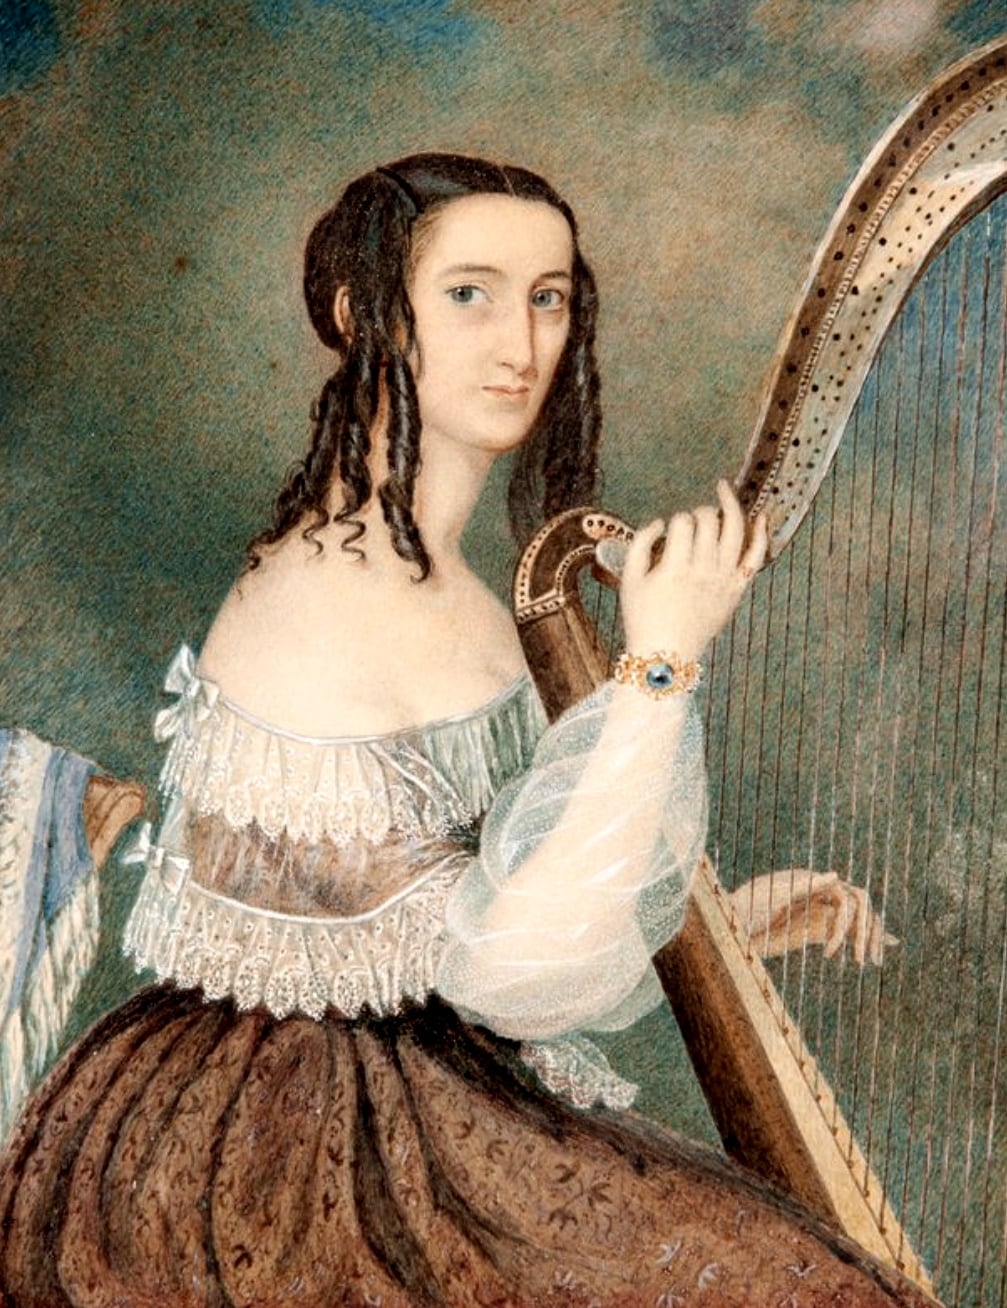 Mrs. Andrews, playing her harp; by Martha Berkeley, c. 1845 (Art Gallery of South Australia)